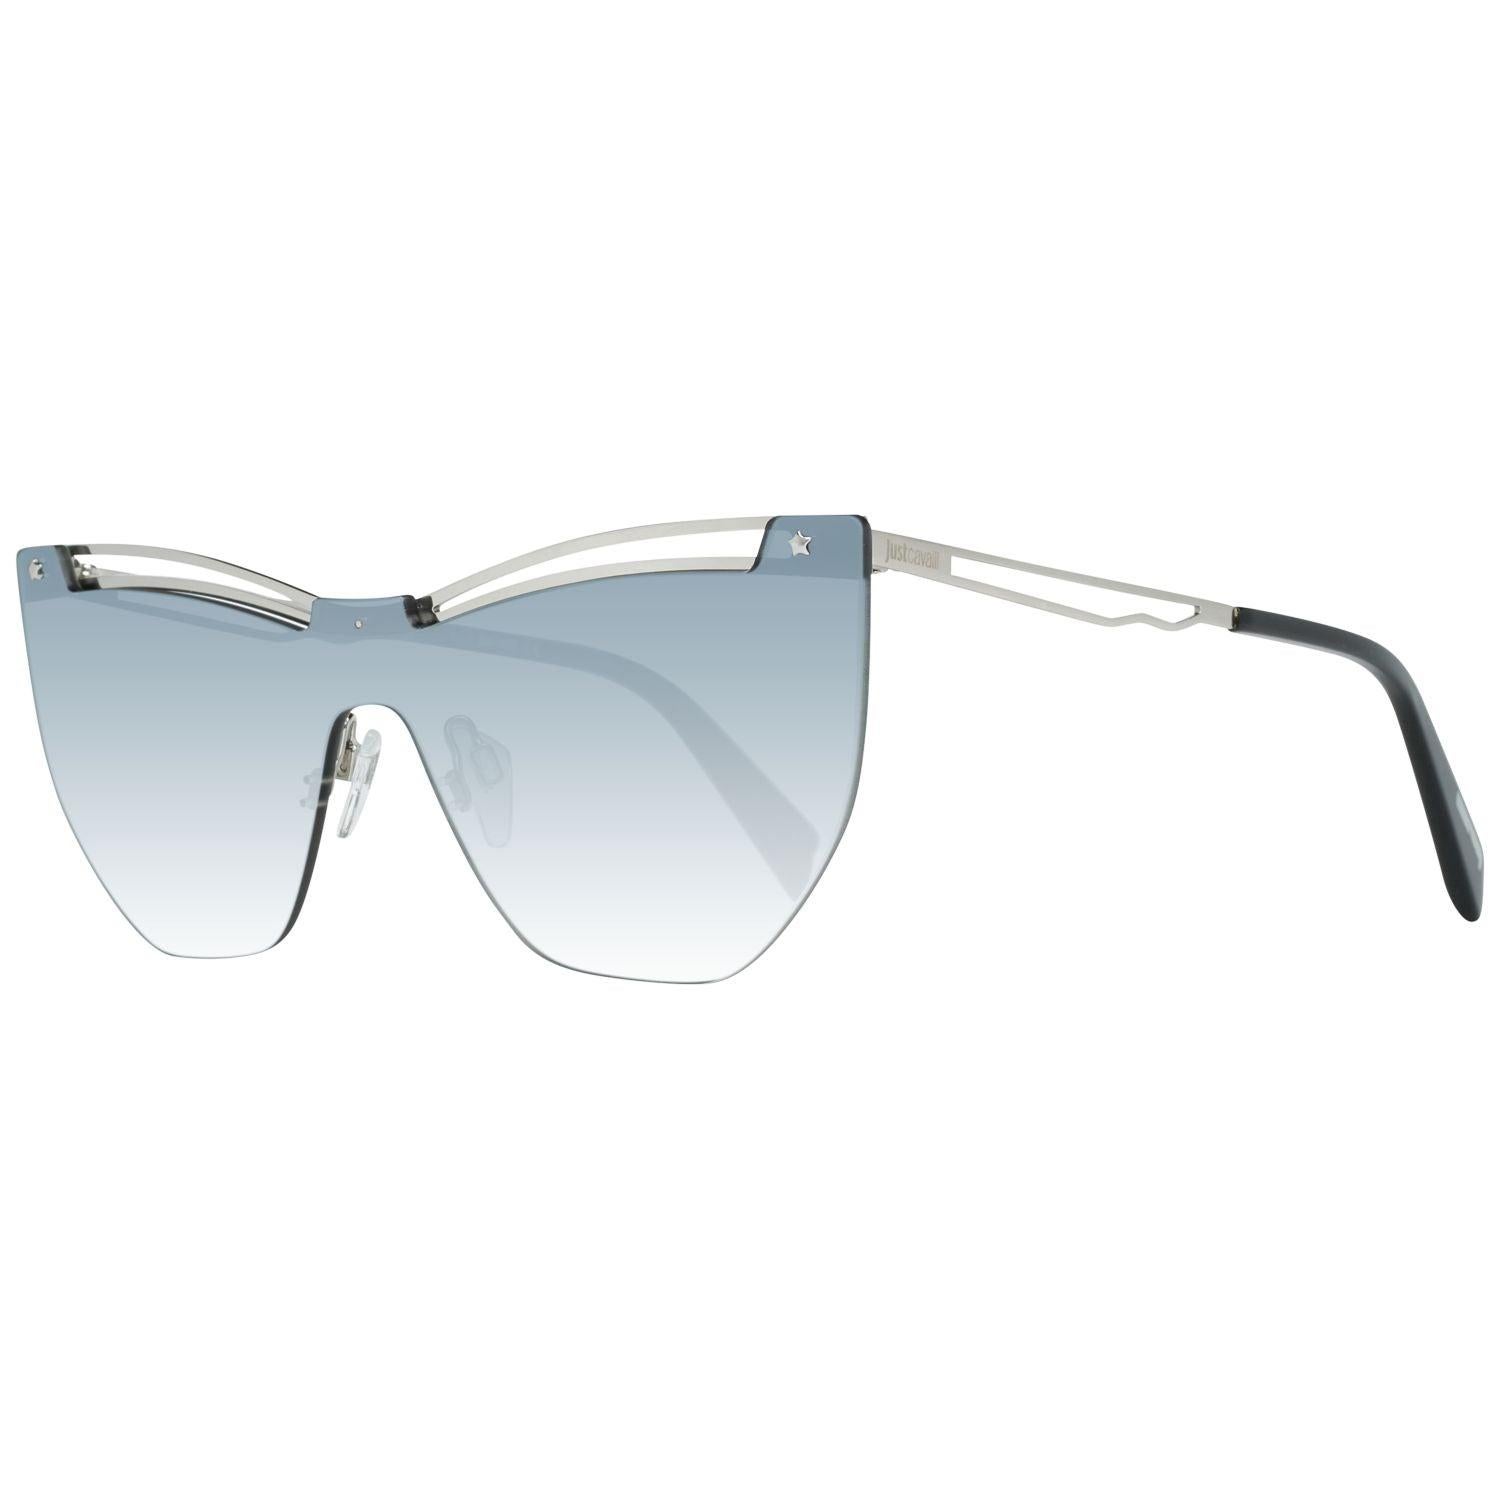 Accessoires Zonnebrillen & Eyewear Zonnebrillen Cavalli 2000s vintage gespiegelde randloze wrap zonnebril zilver Dafne 62s 